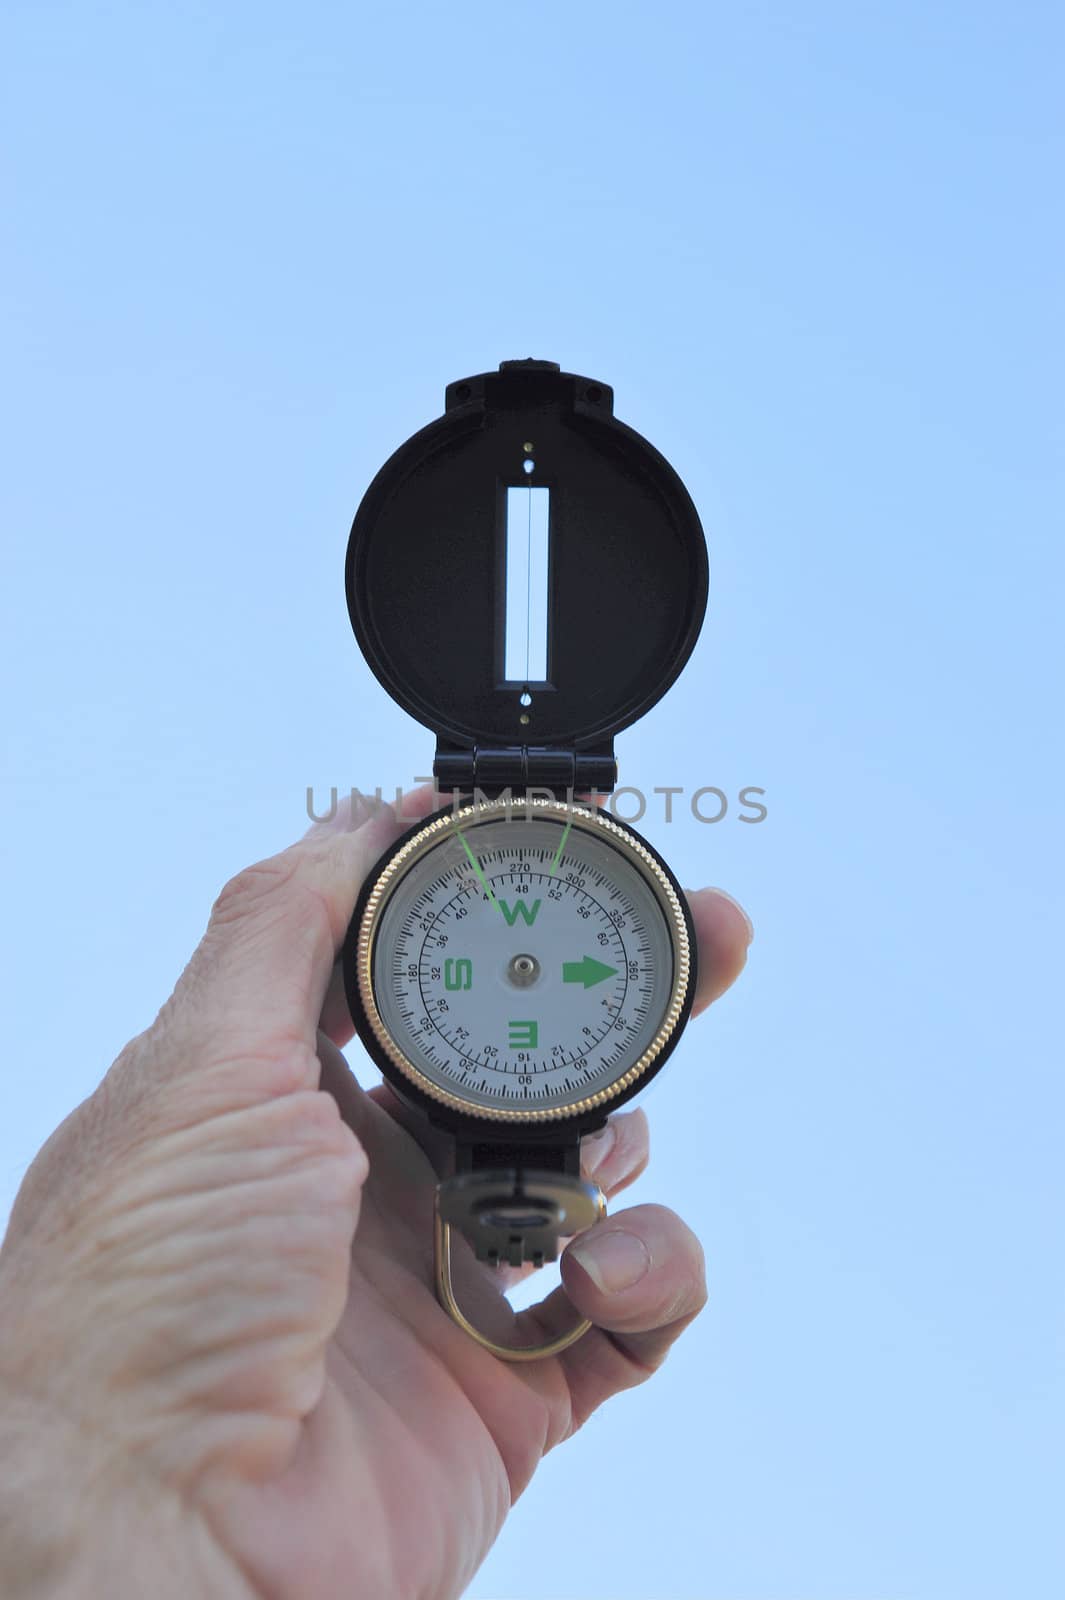 Lensatic Compass by bendicks